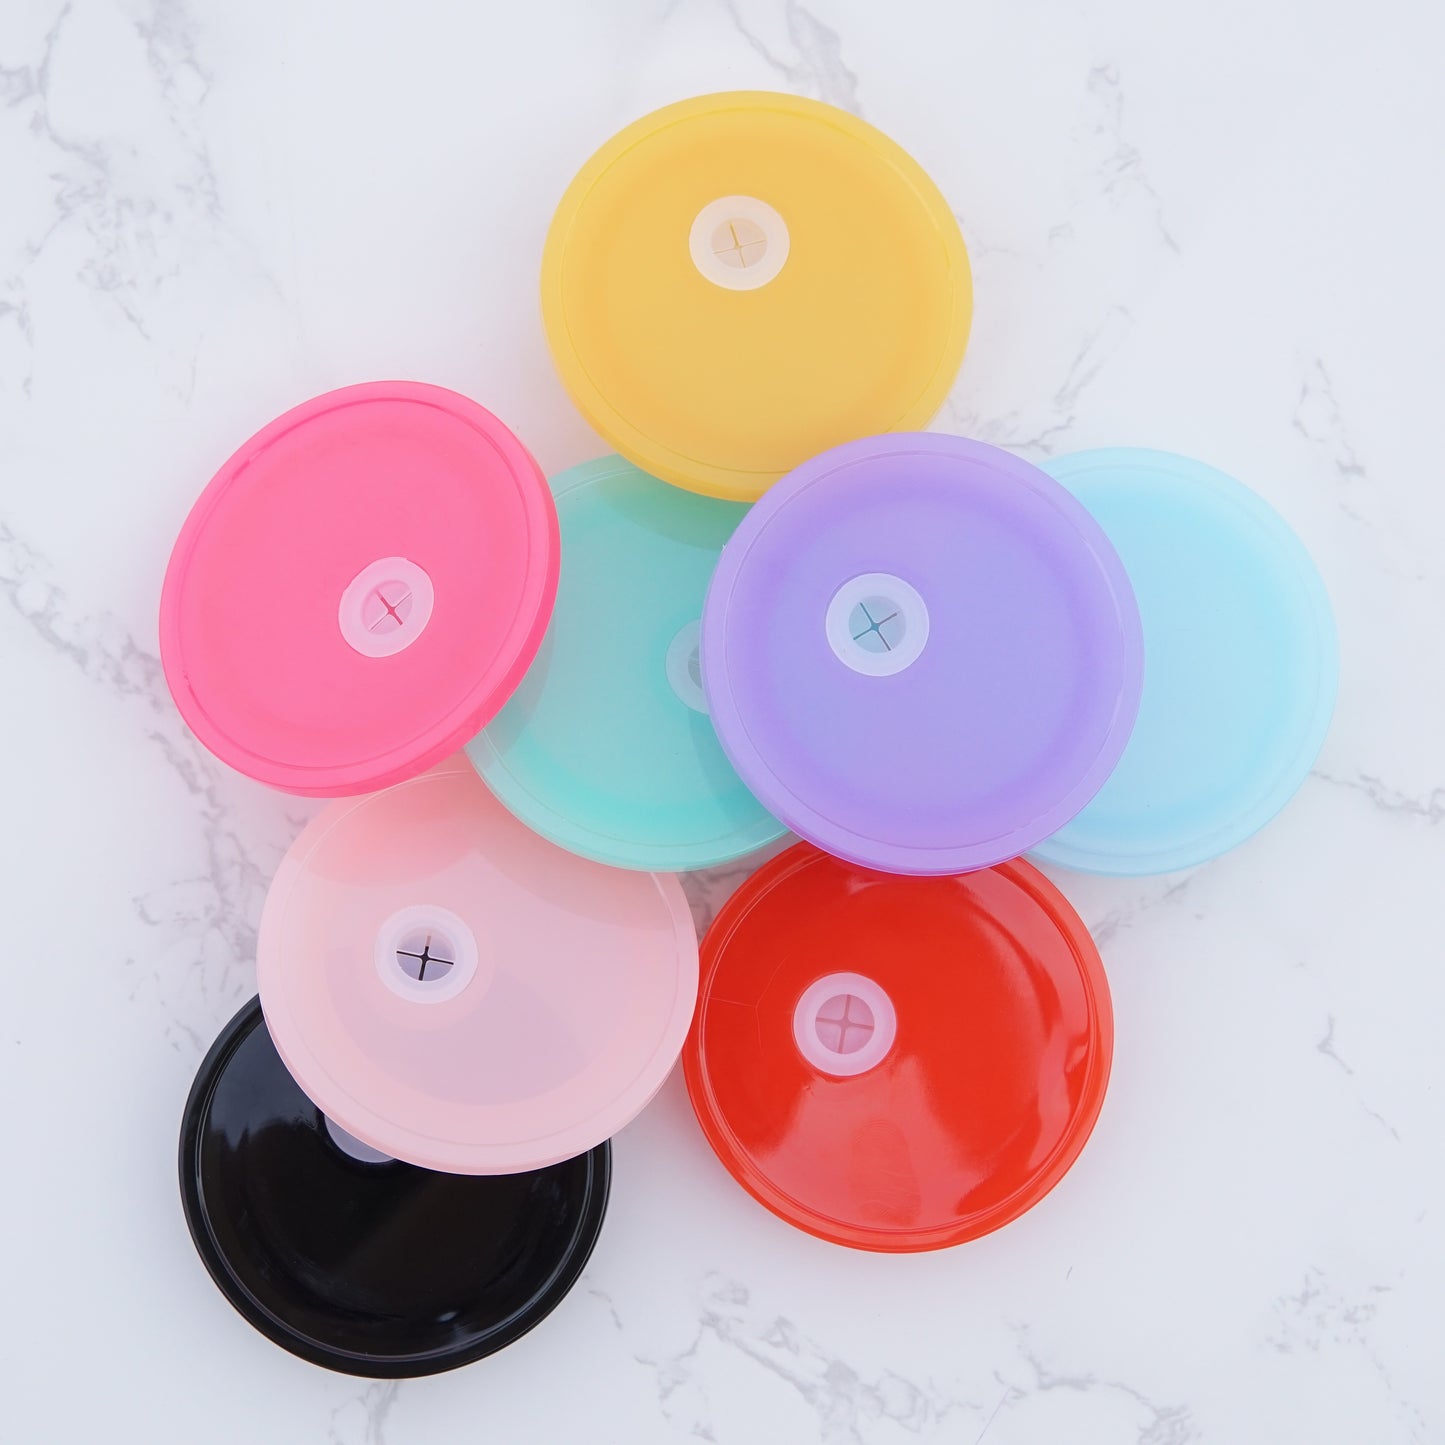 Acrylic Color Dishwasher Safe Lids for 16oz Cups